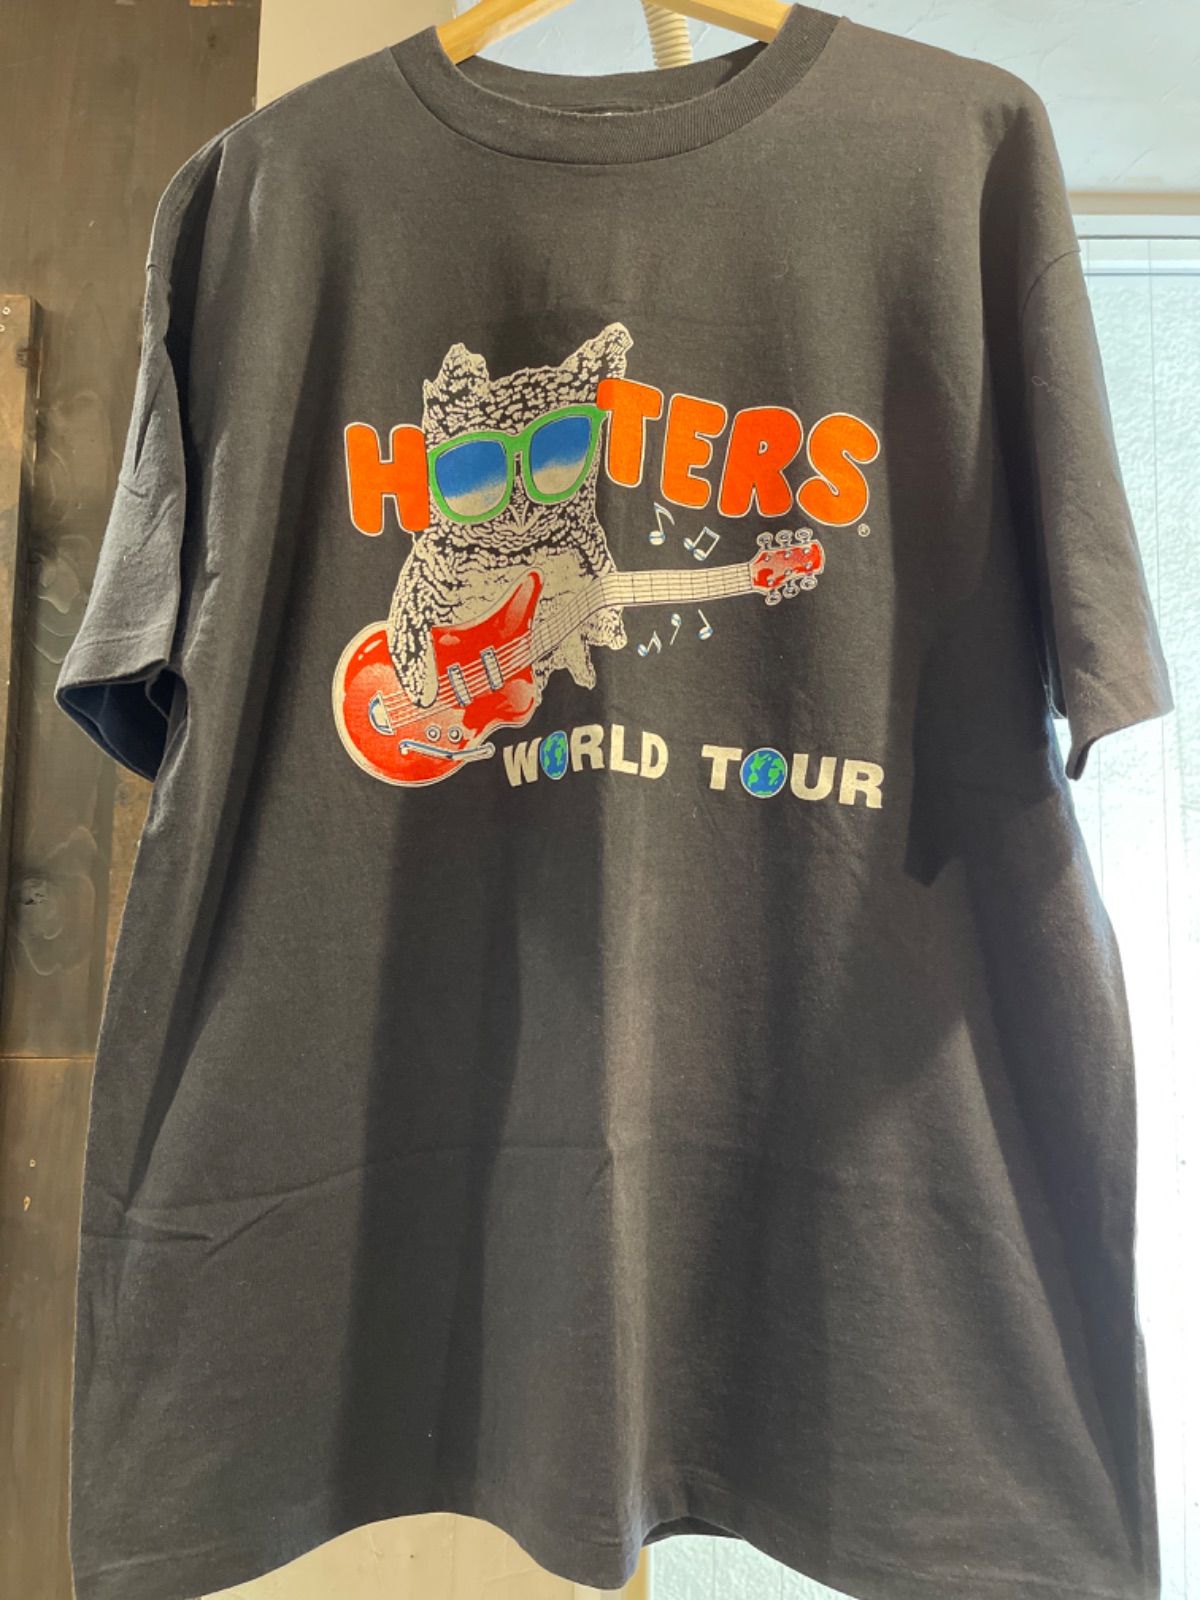 hooters workd tour tee | sacidkordas.com